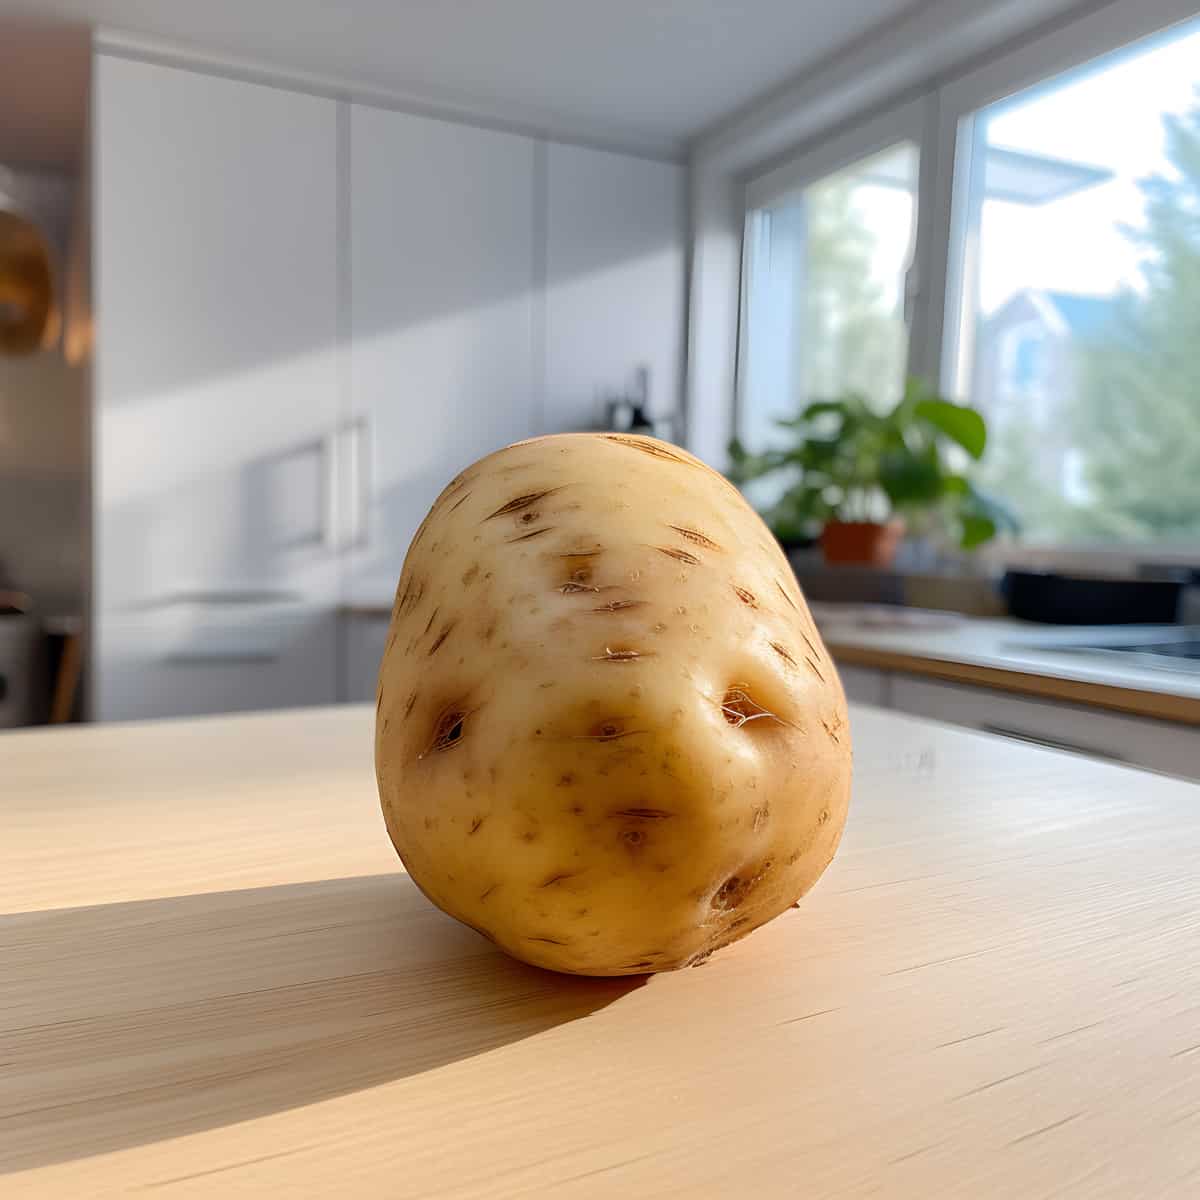 Berlichingen Potatoes on a kitchen counter